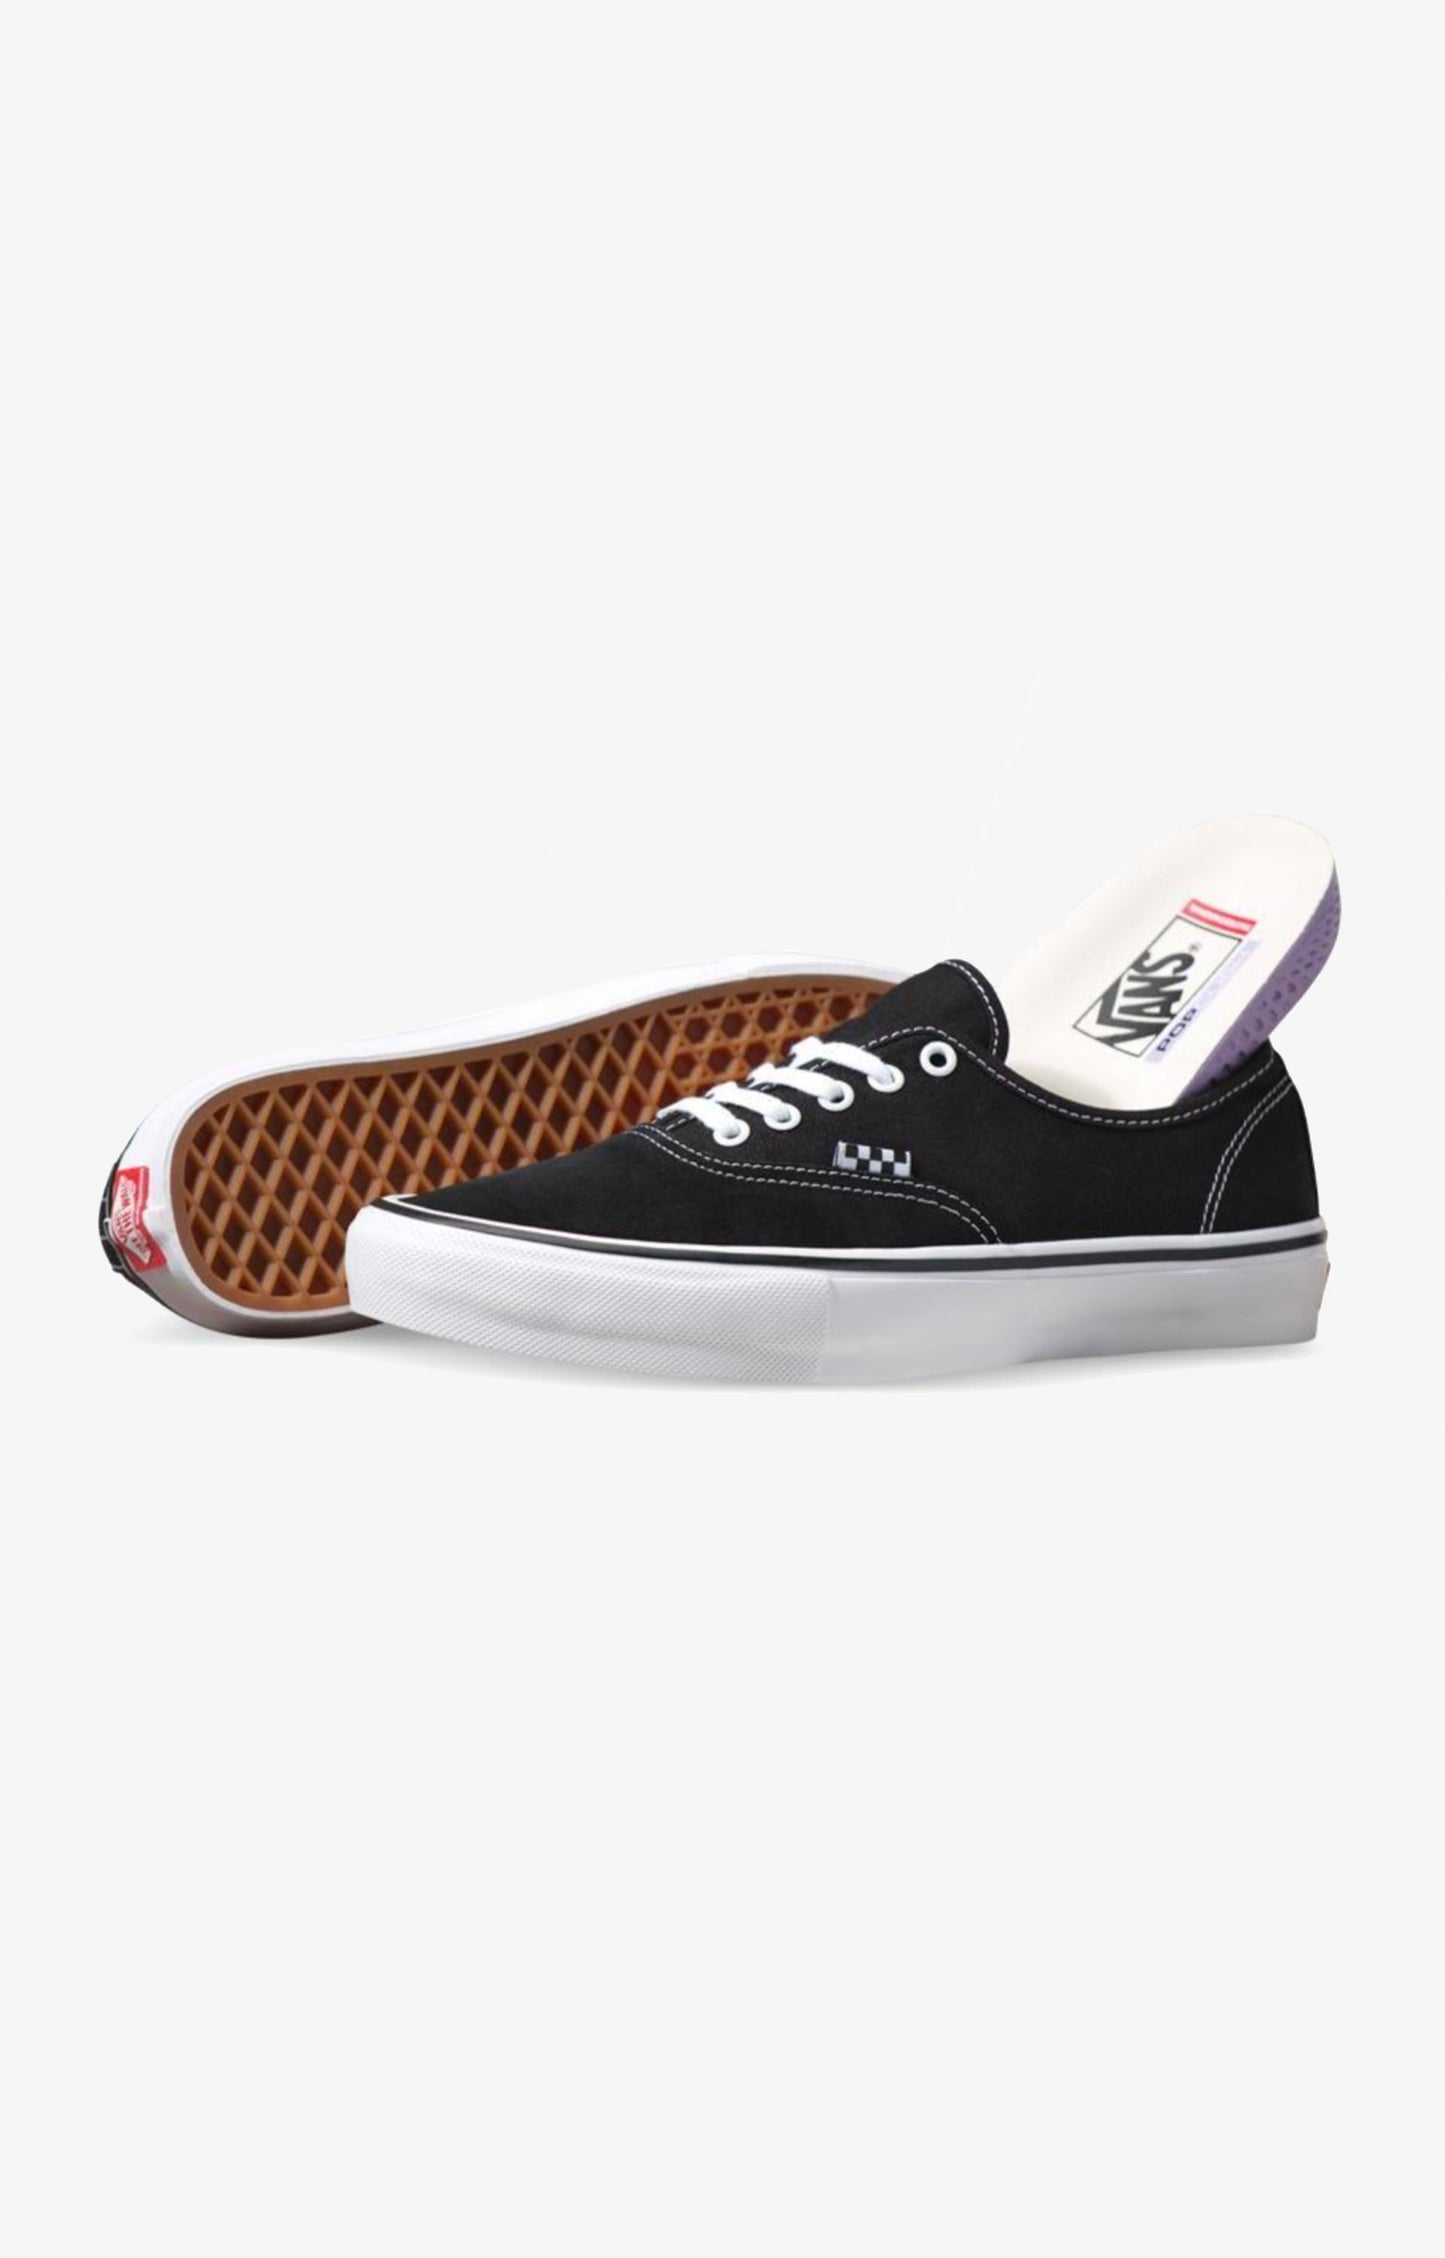 Vans Skate Authentic Shoe, Black/White